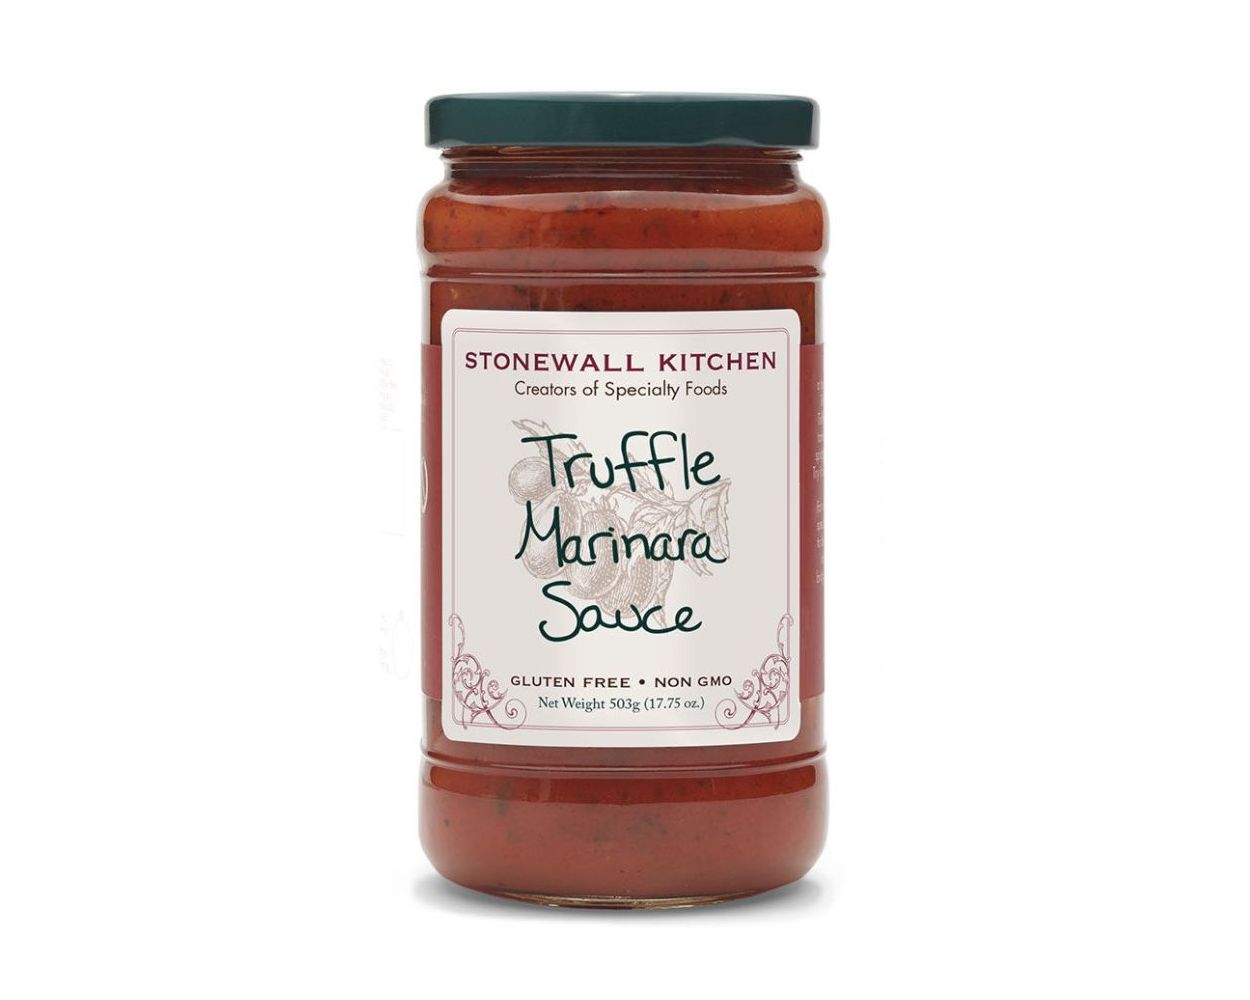 Truffle Marinara Sauce from Stonewall Kitchen | American Heritage